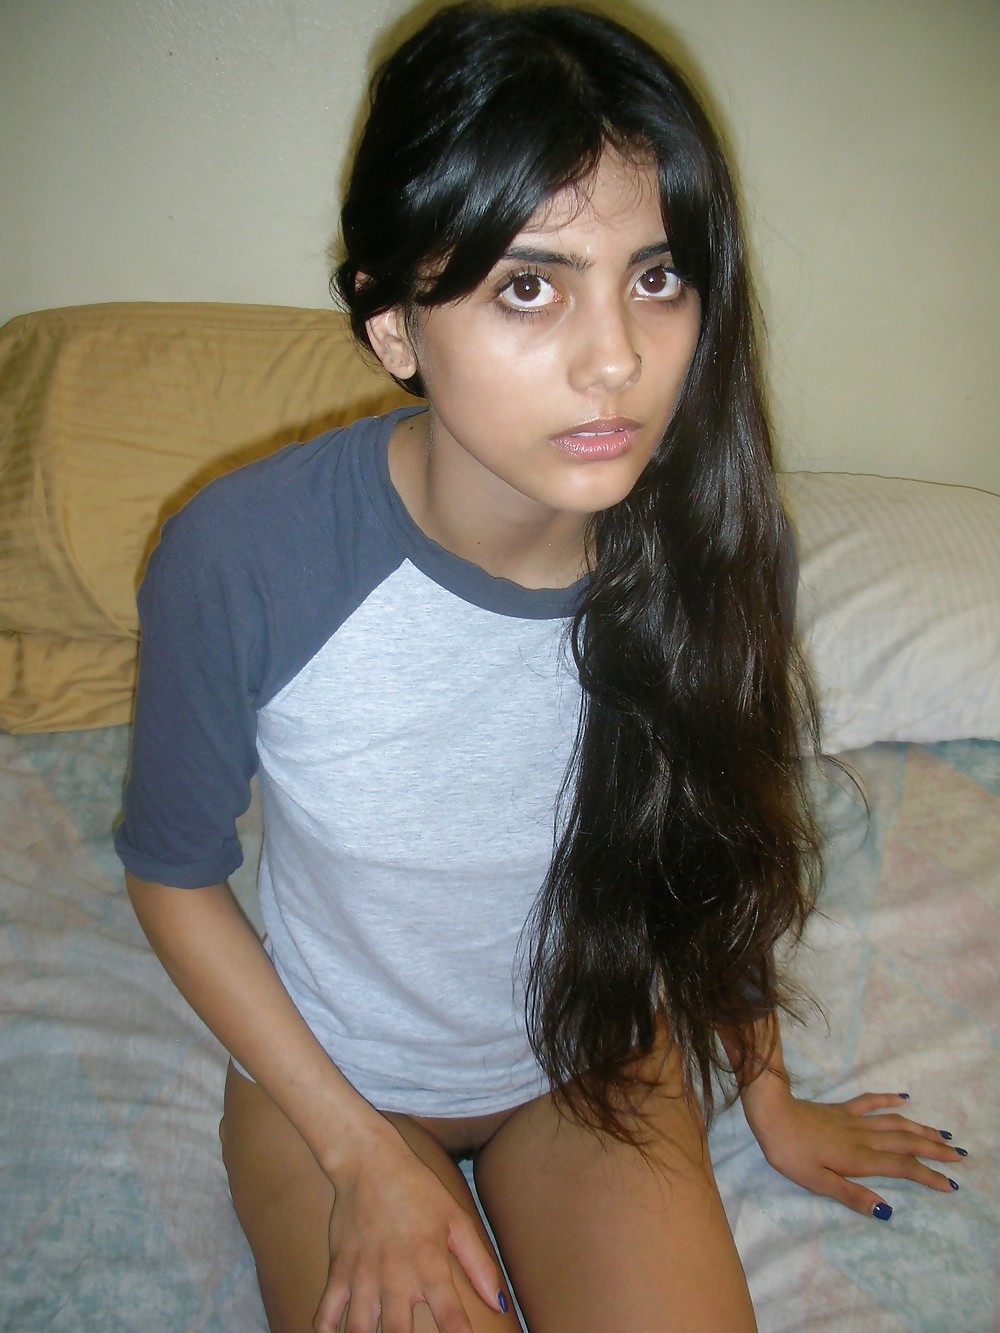 Amateurs Asian Delights 18 - A cute little Indian girl 01 #17590268